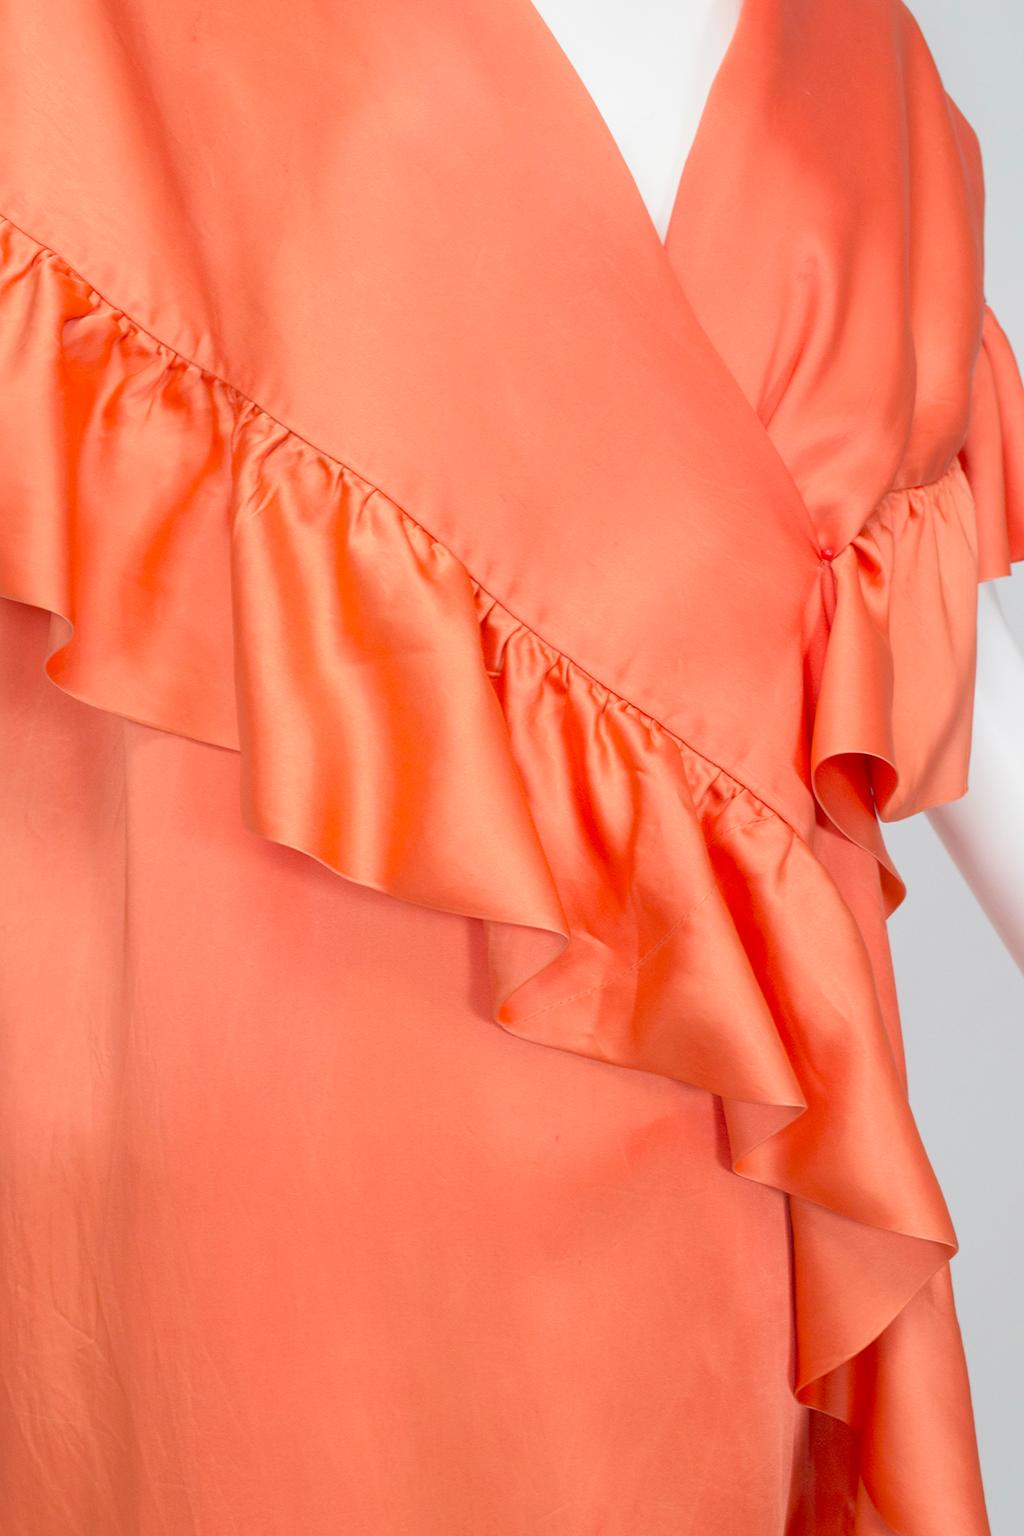 Orange Tangerine Satin Sleeveless Inverness Coat Dress w Cascading Ruffles–O/S, 1960s For Sale